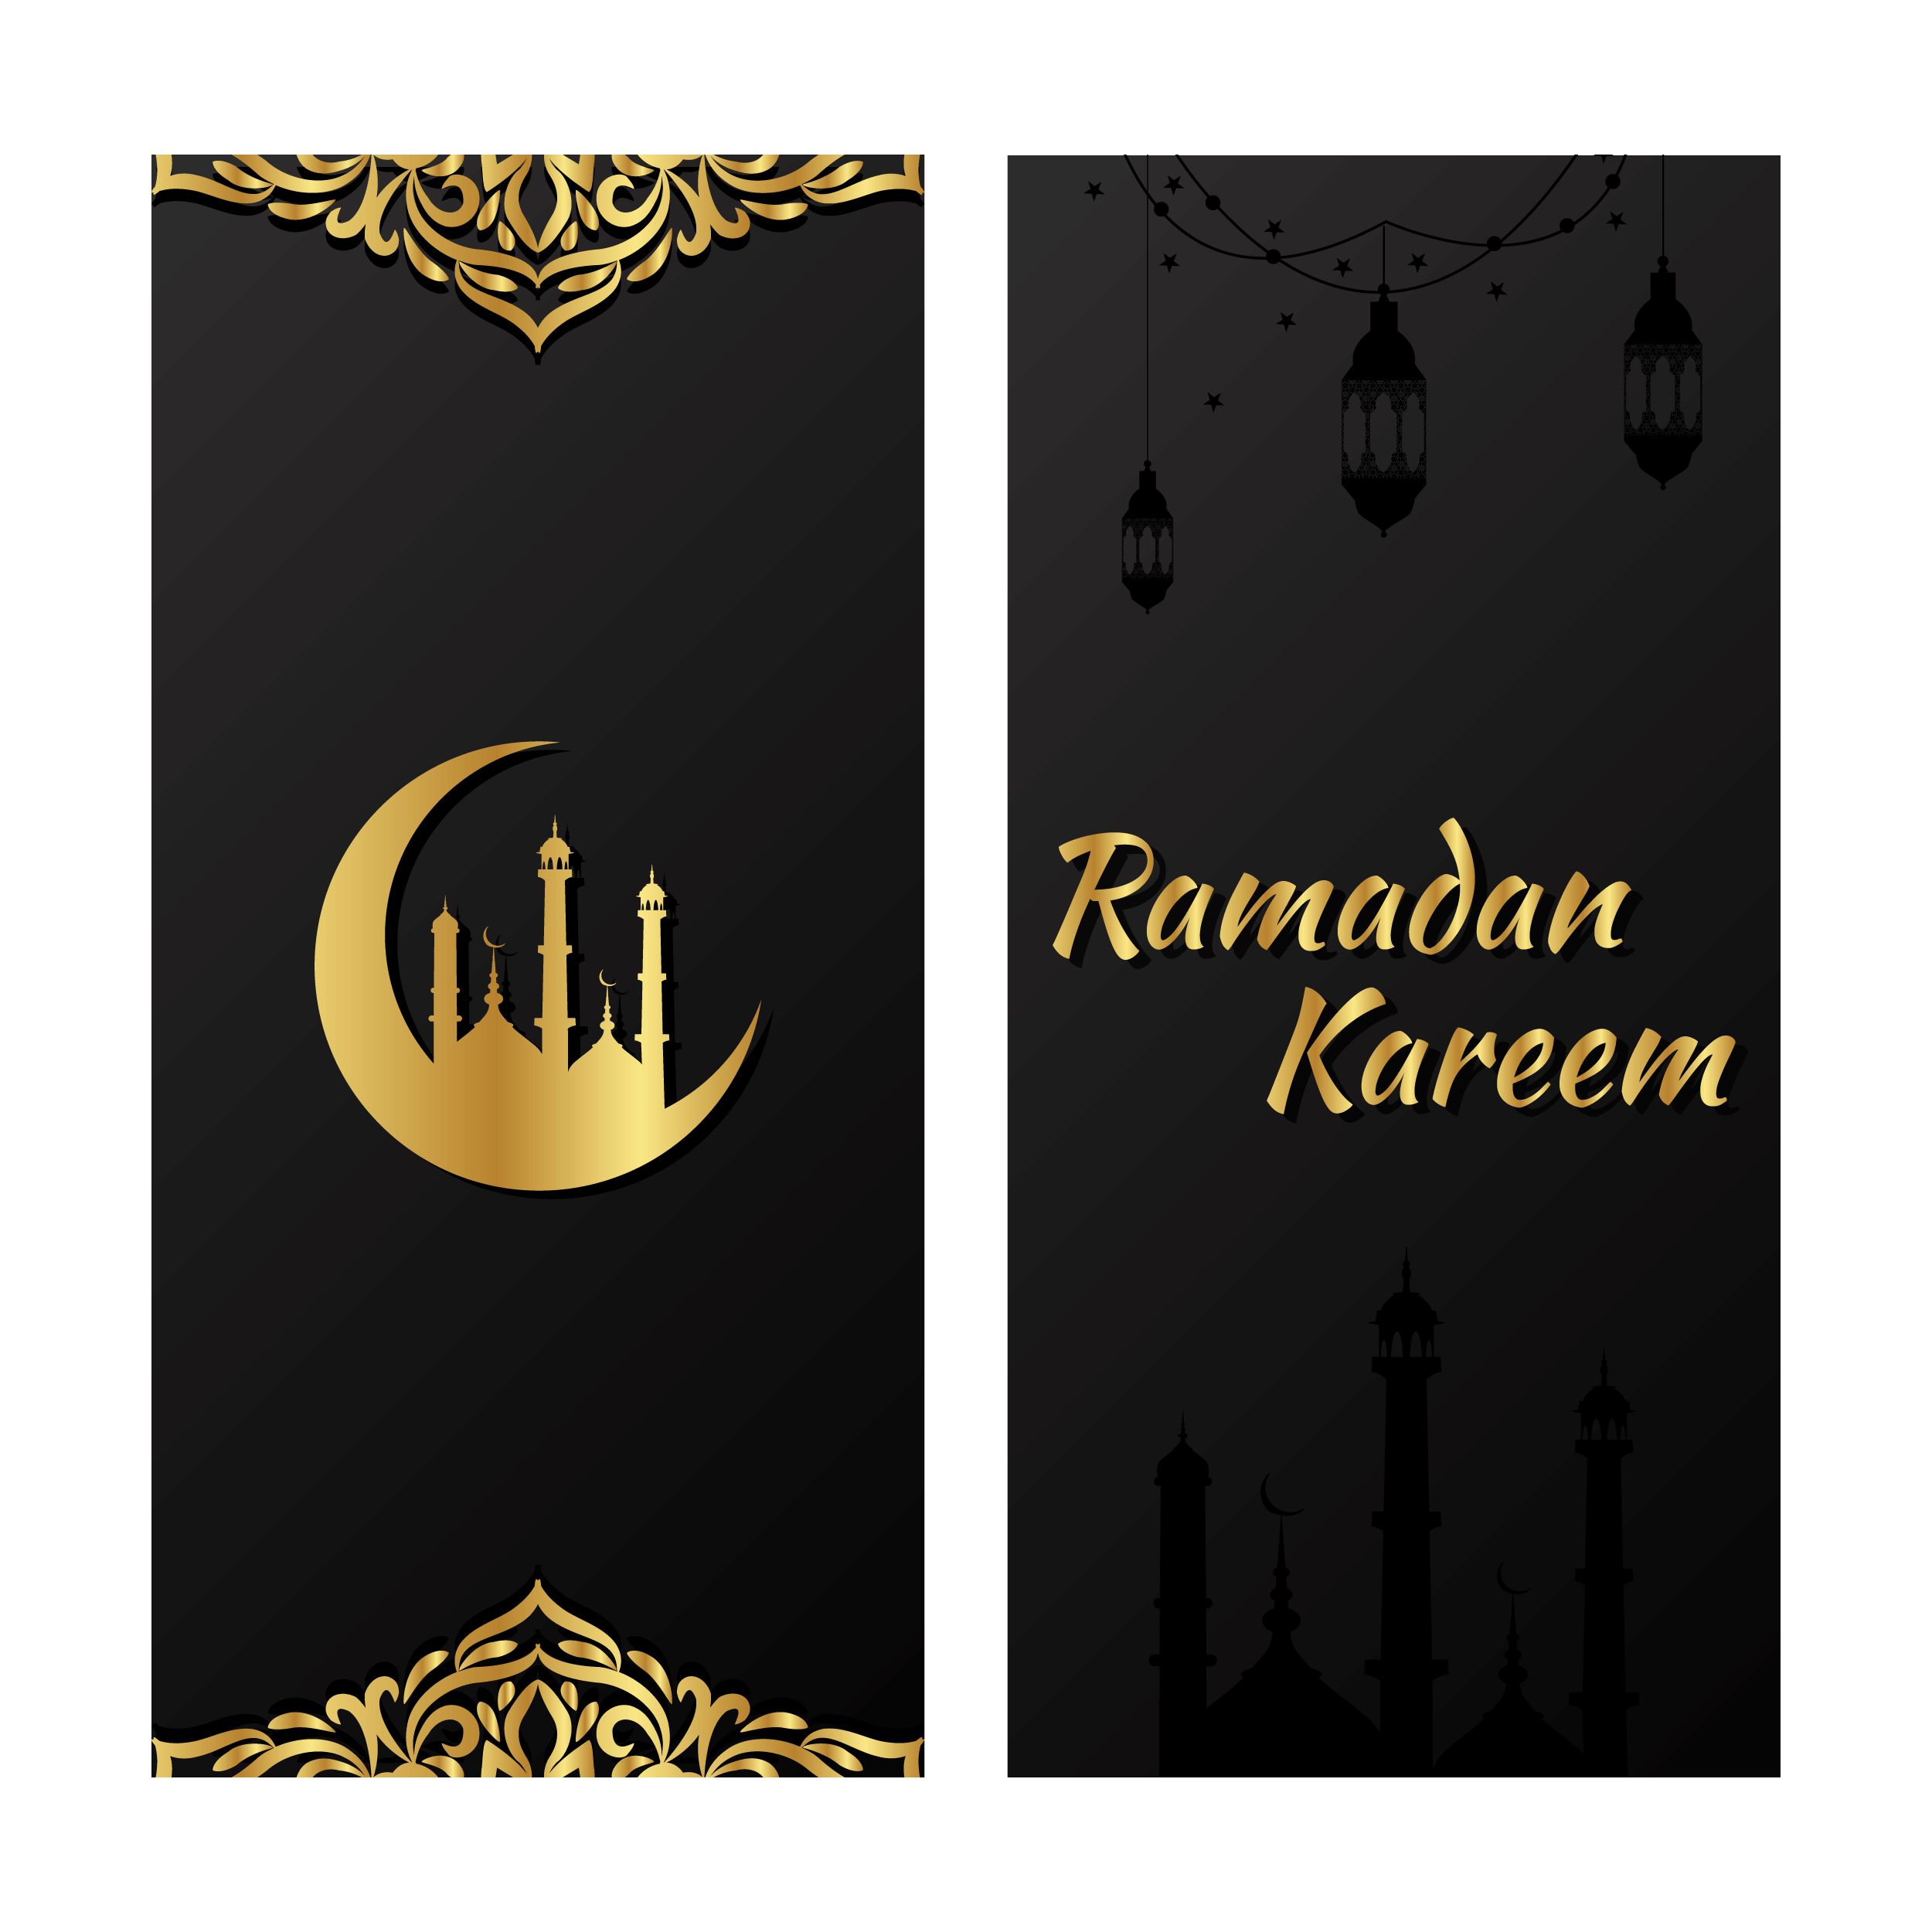 Ramadan Kareem Gold And Black Banner Set Download Free Vectors Clipart Graphics Vector Art